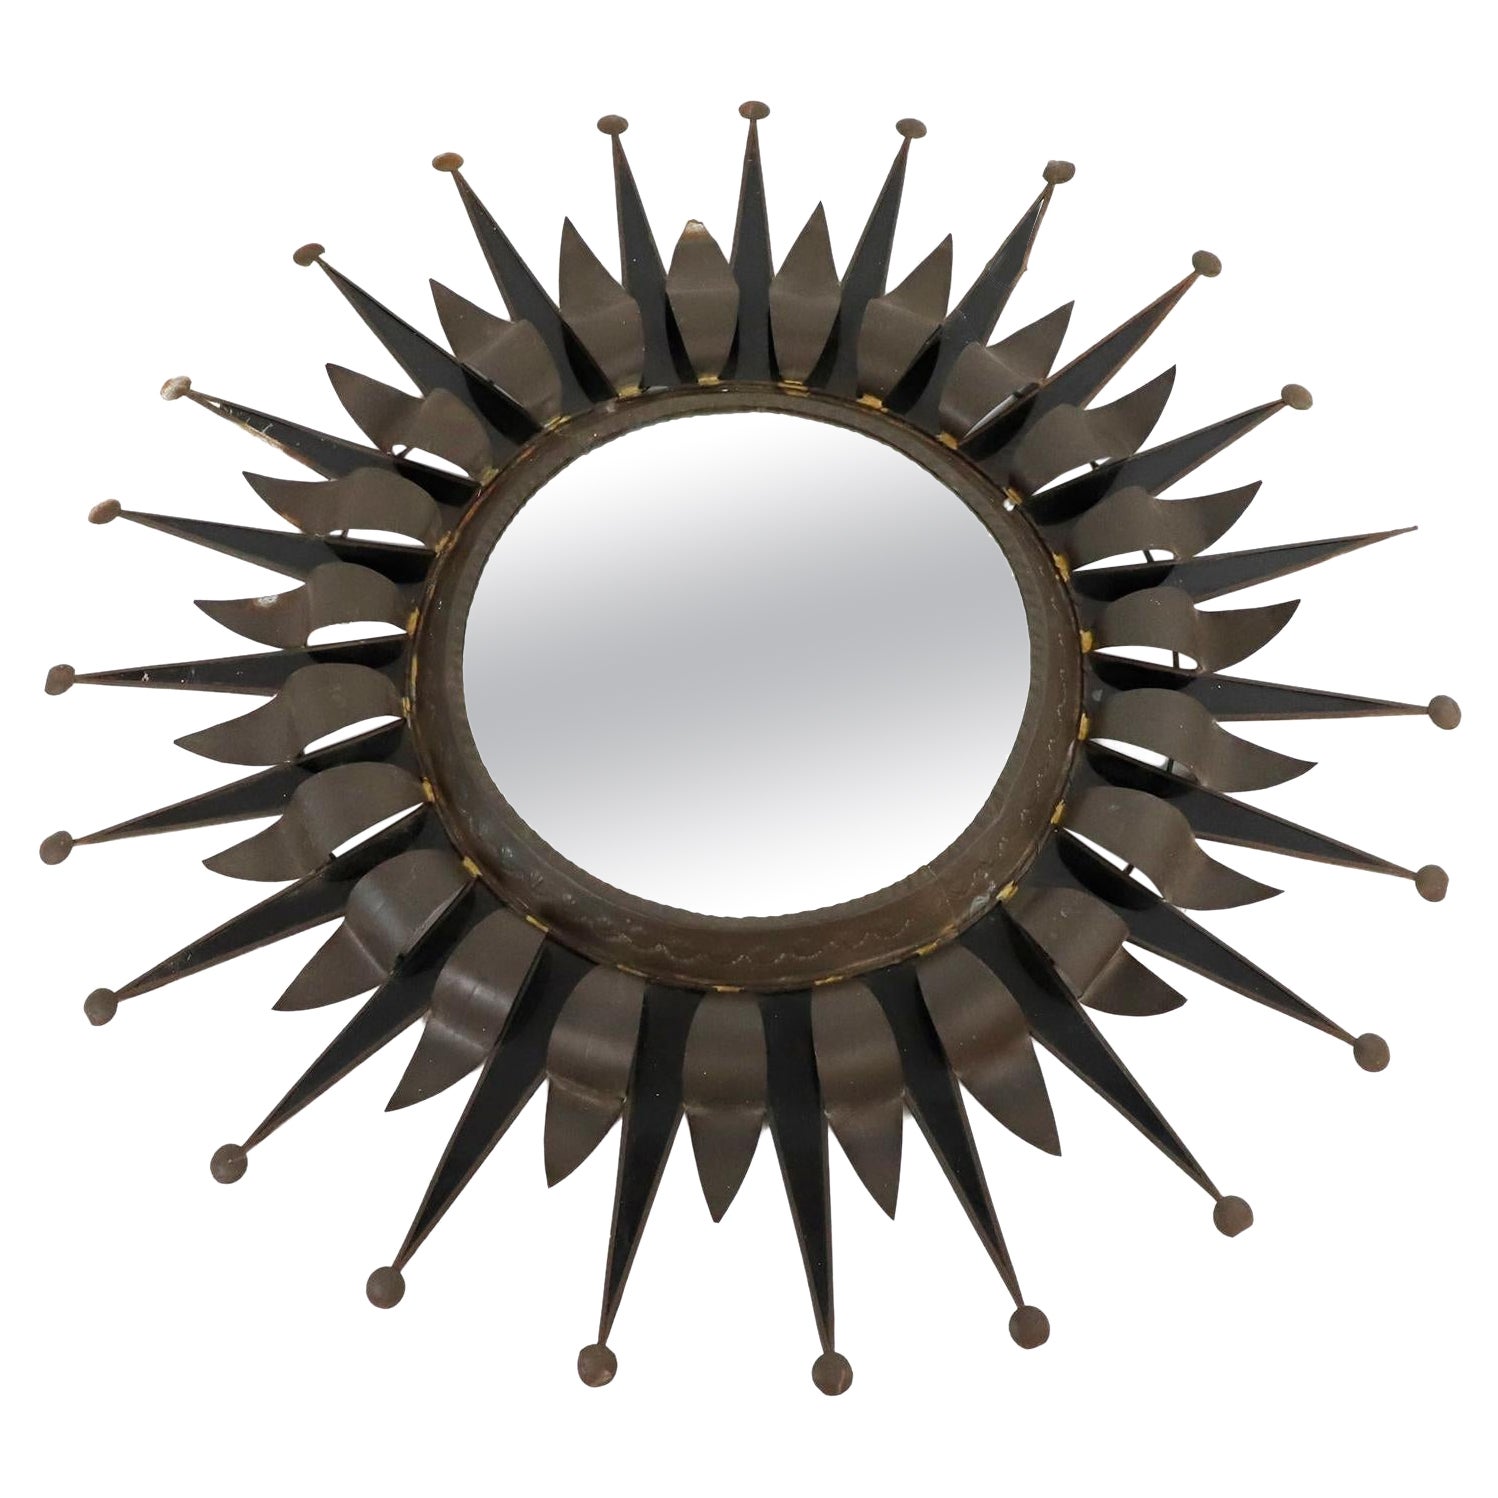 Antique Big Size Mexican Artisanal Sunburst Mirror